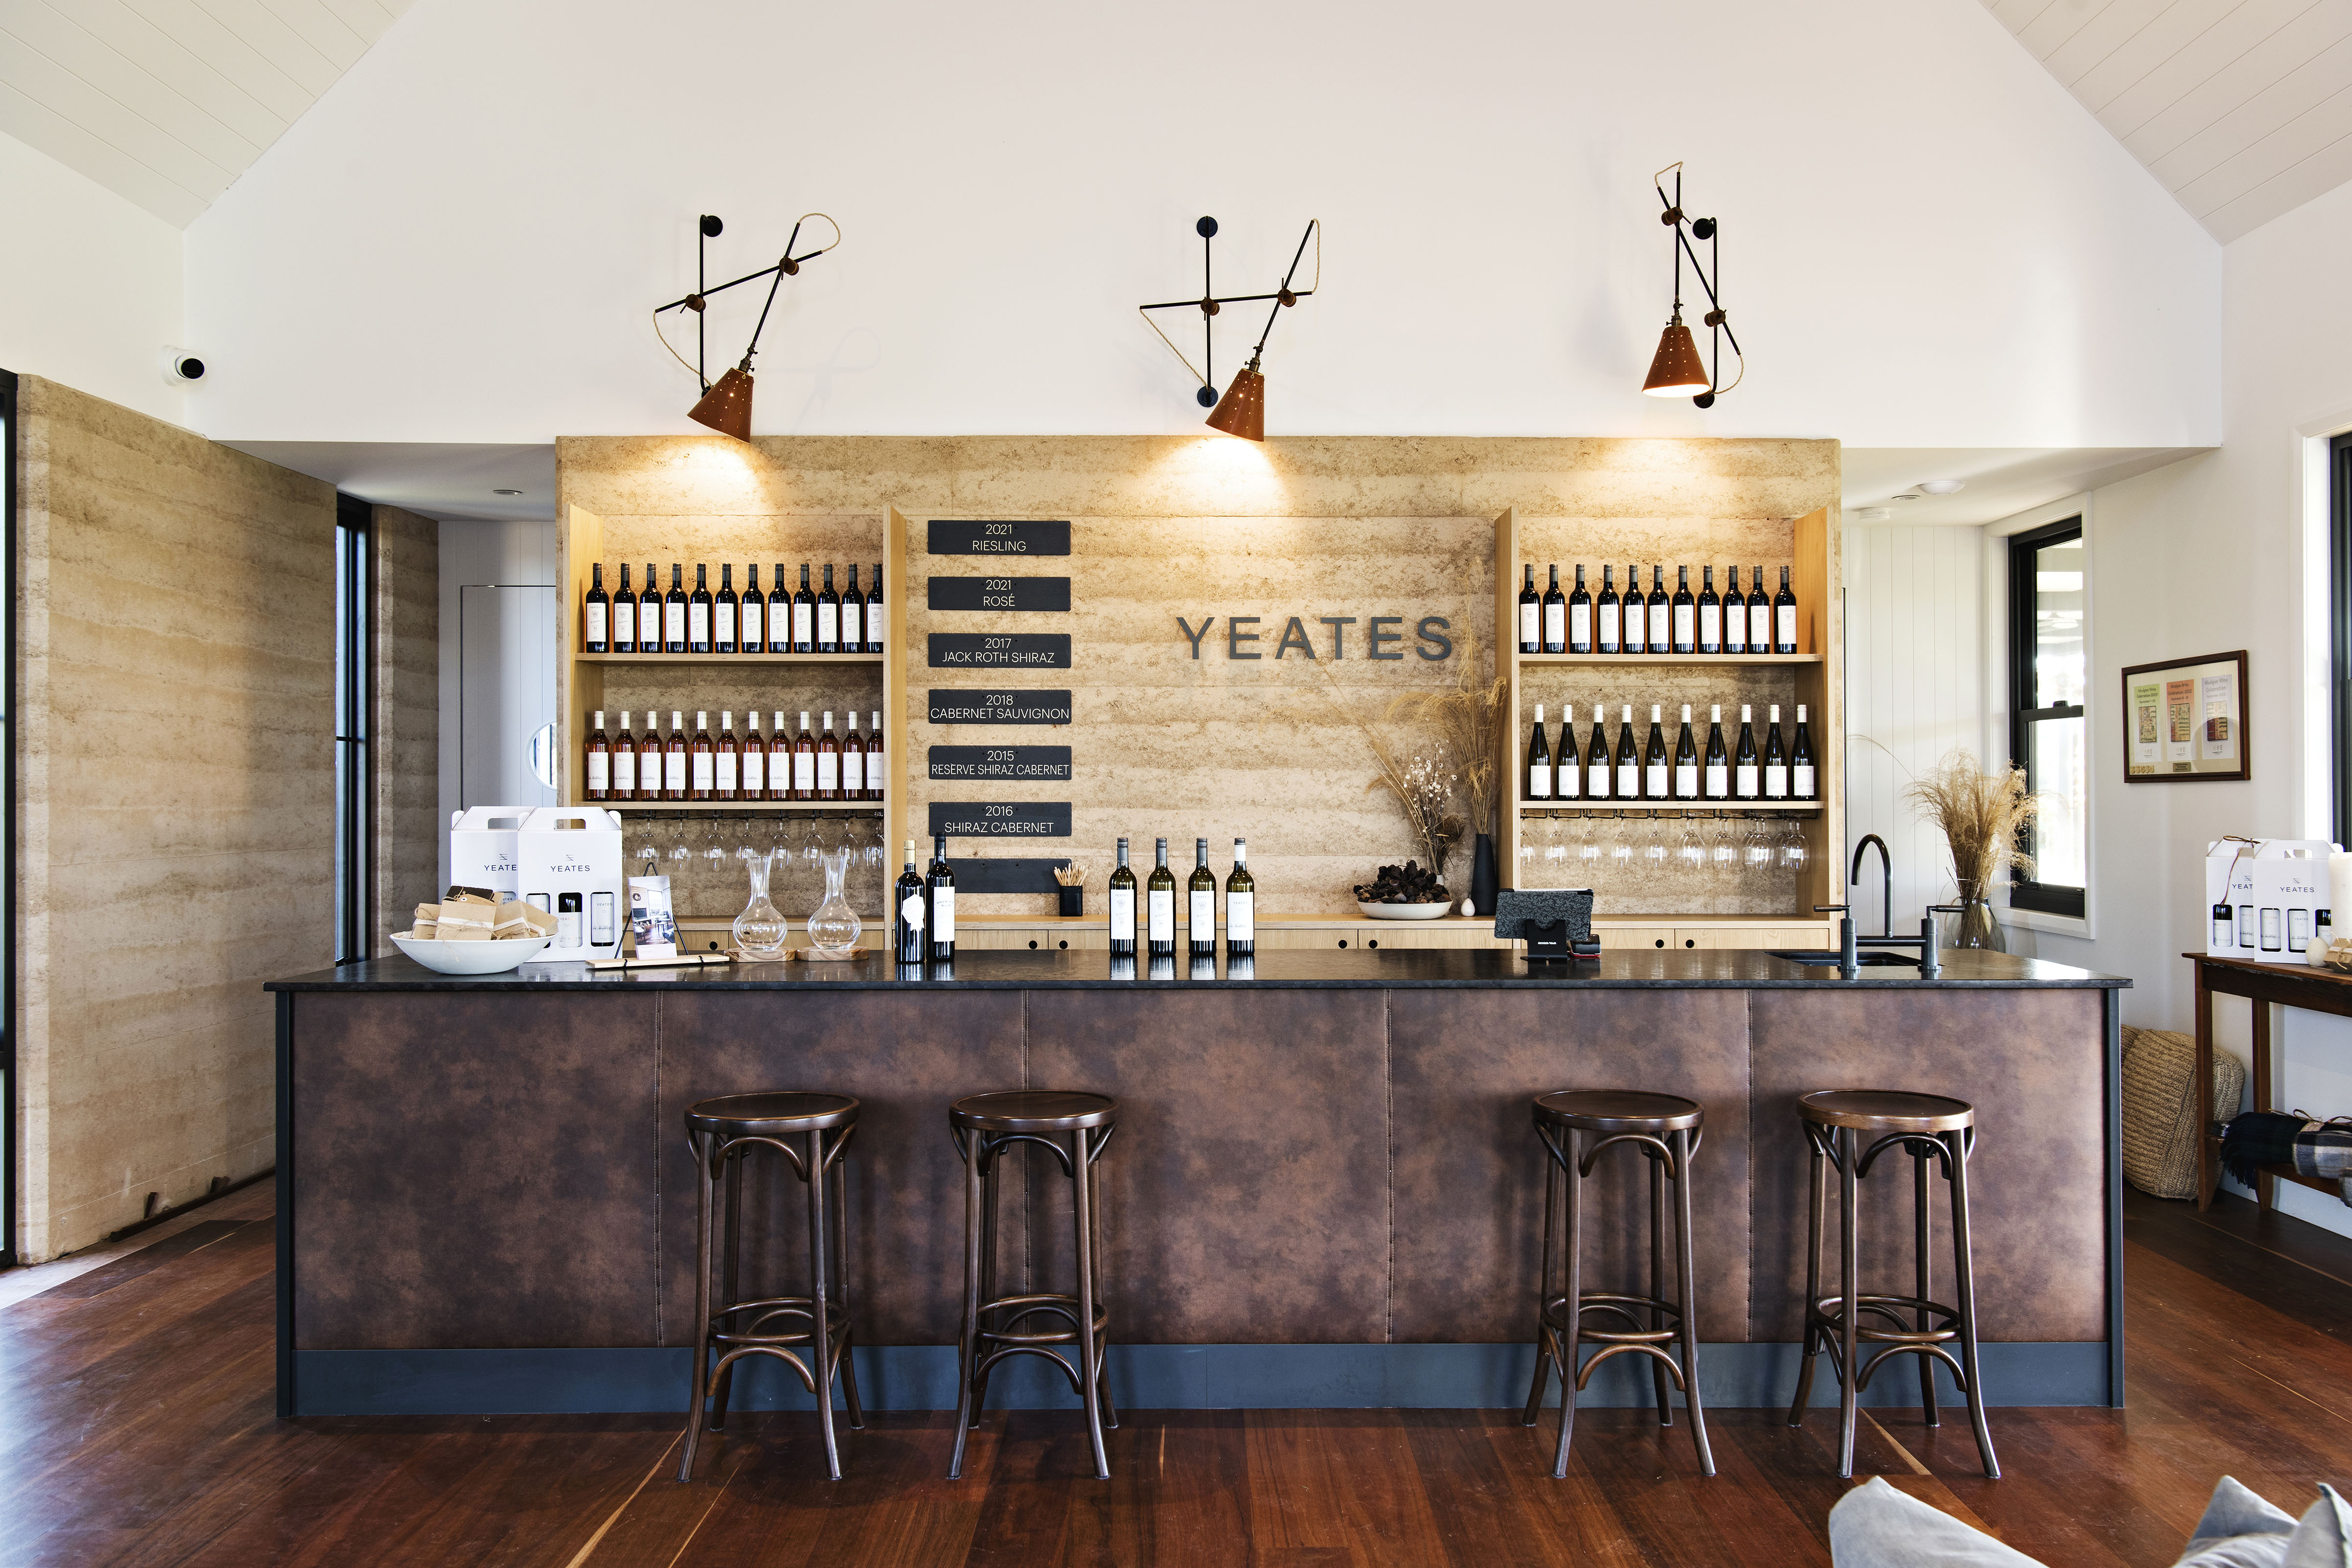 Yeates bar